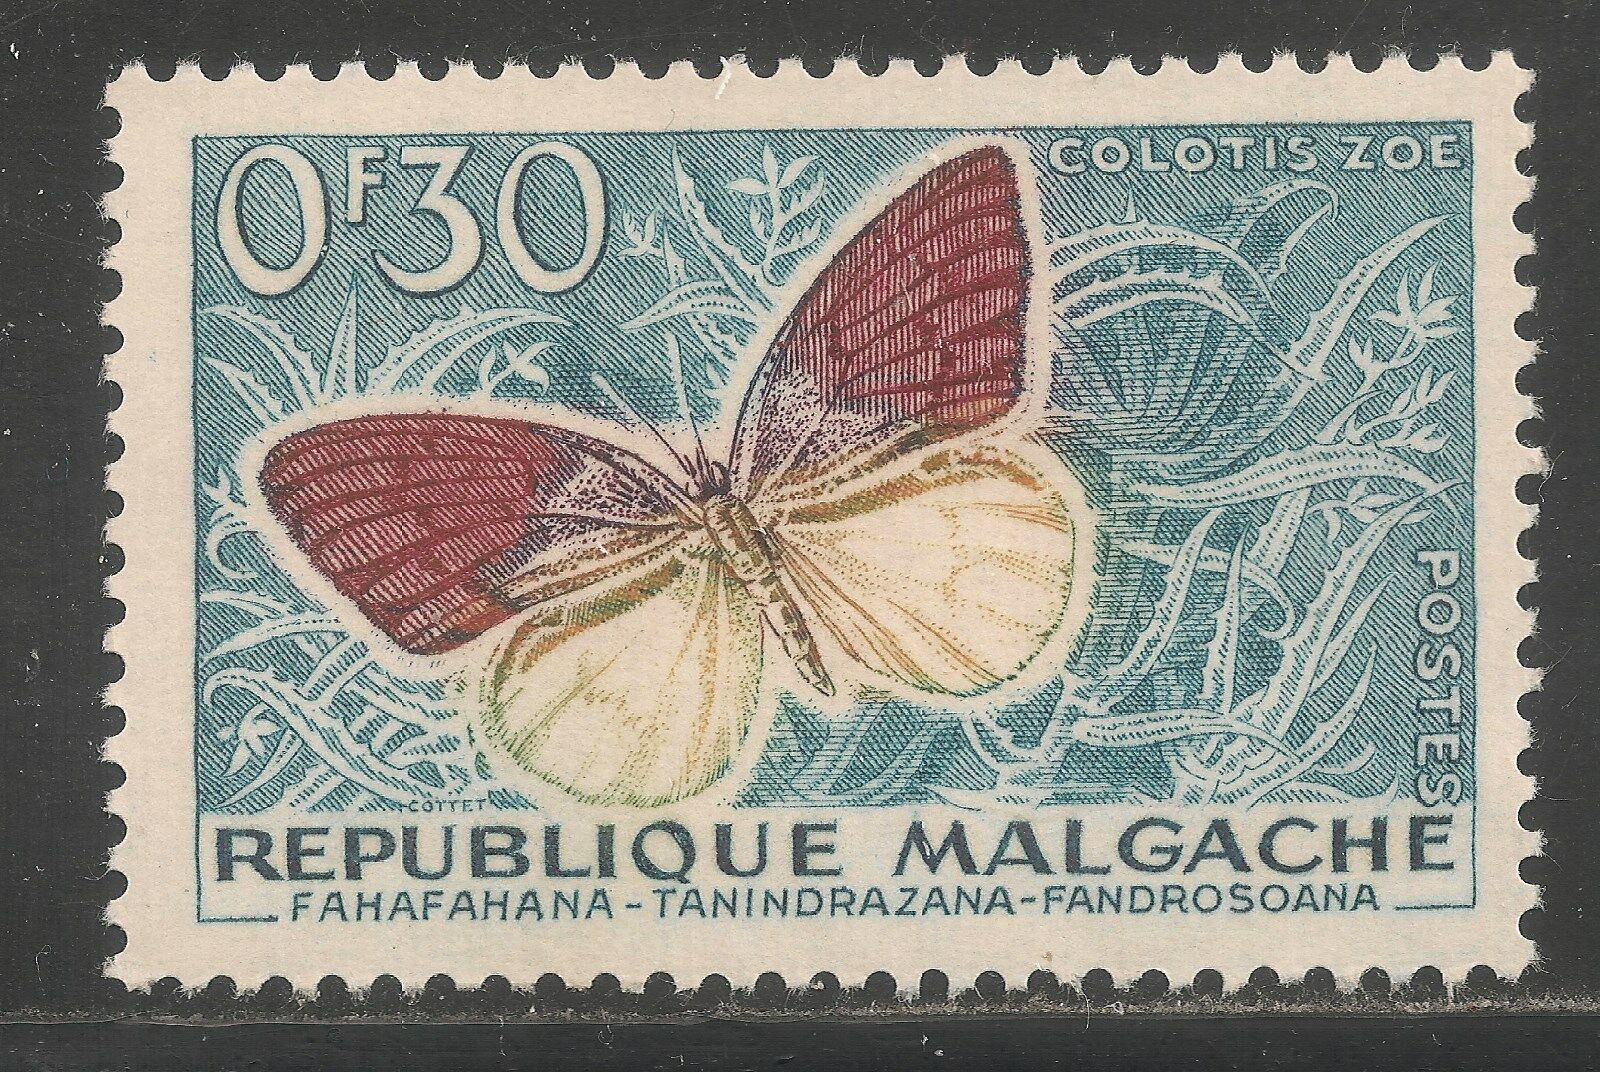 Malagasy Republic #306 (a32) Vf Mint - 1960 30c Colotis Zoe Butterfly